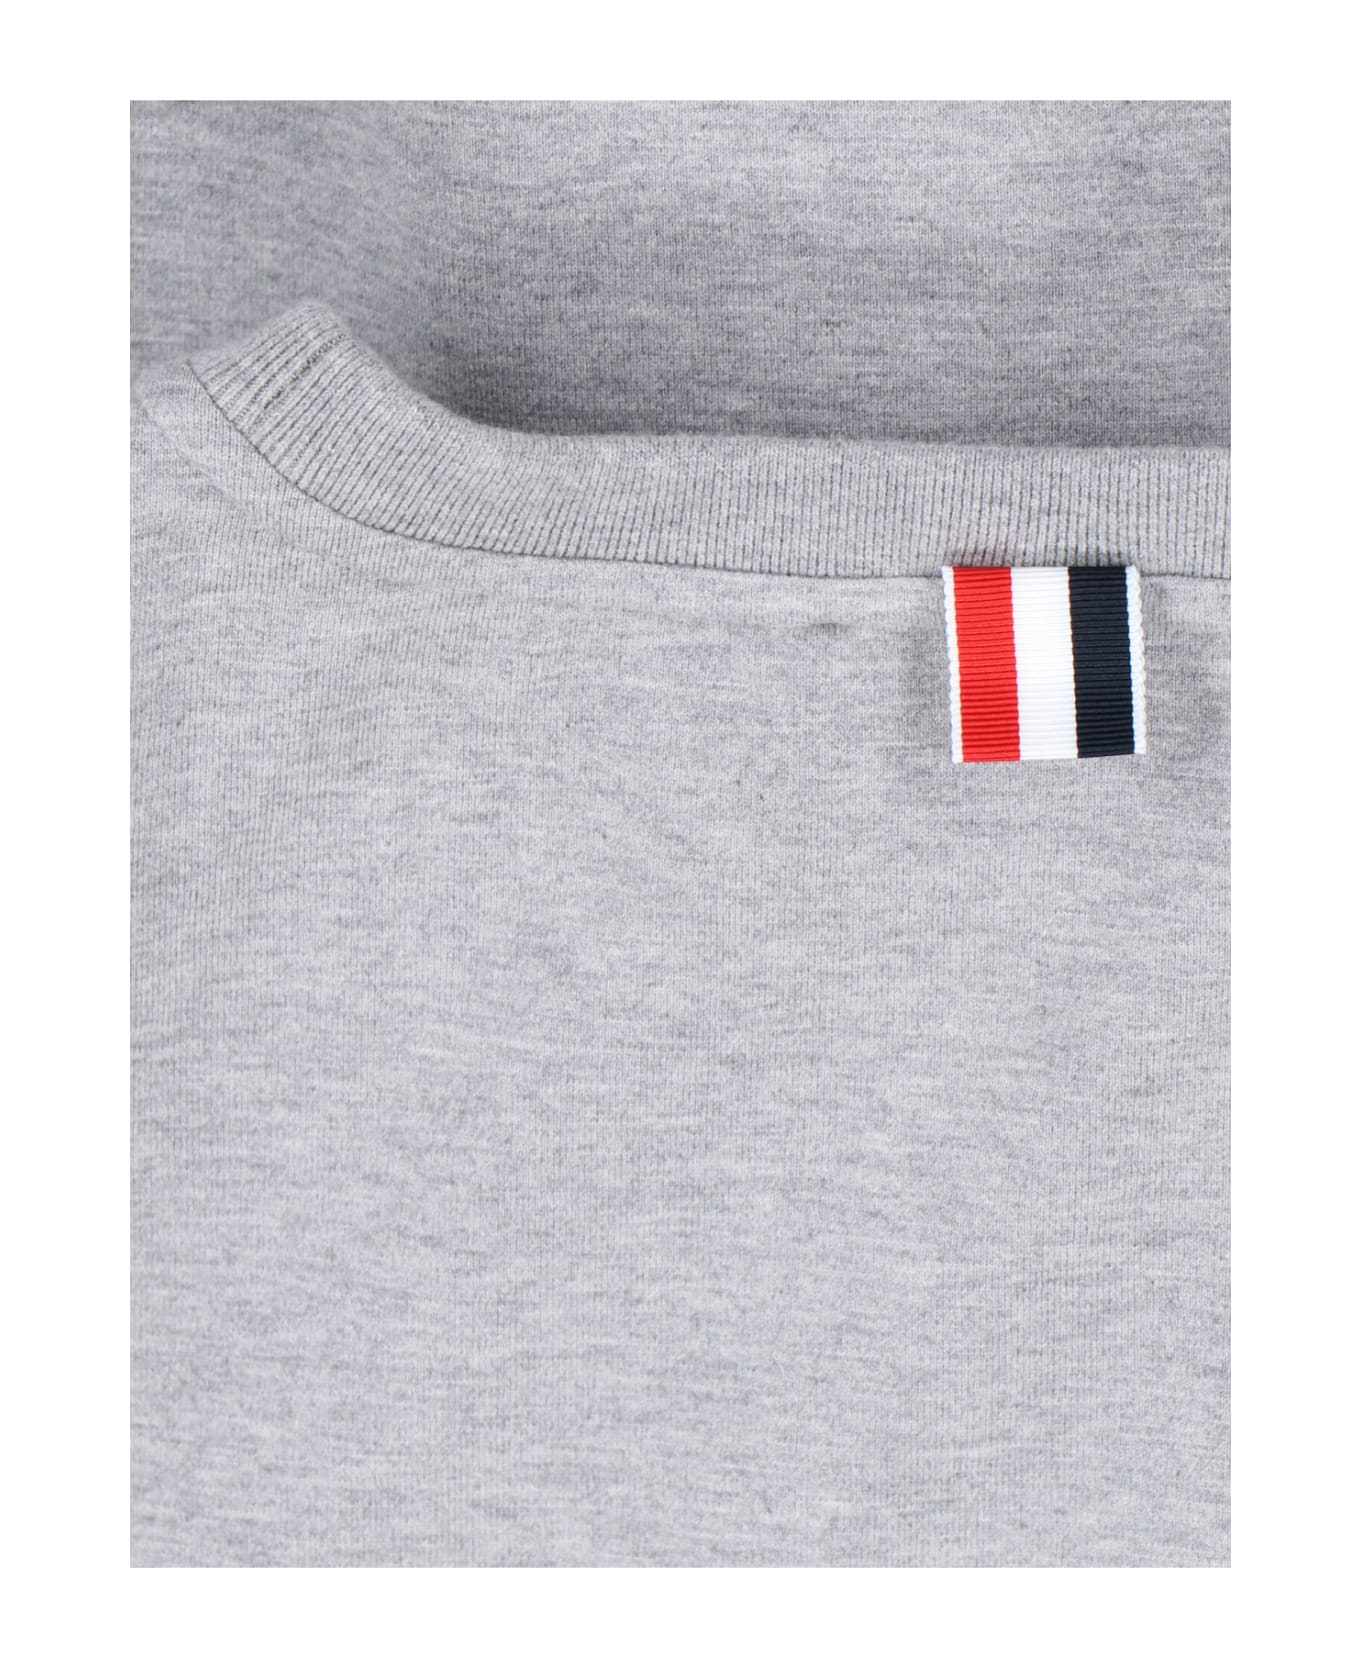 Thom Browne '4-bar' T-shirt - Gray フリース